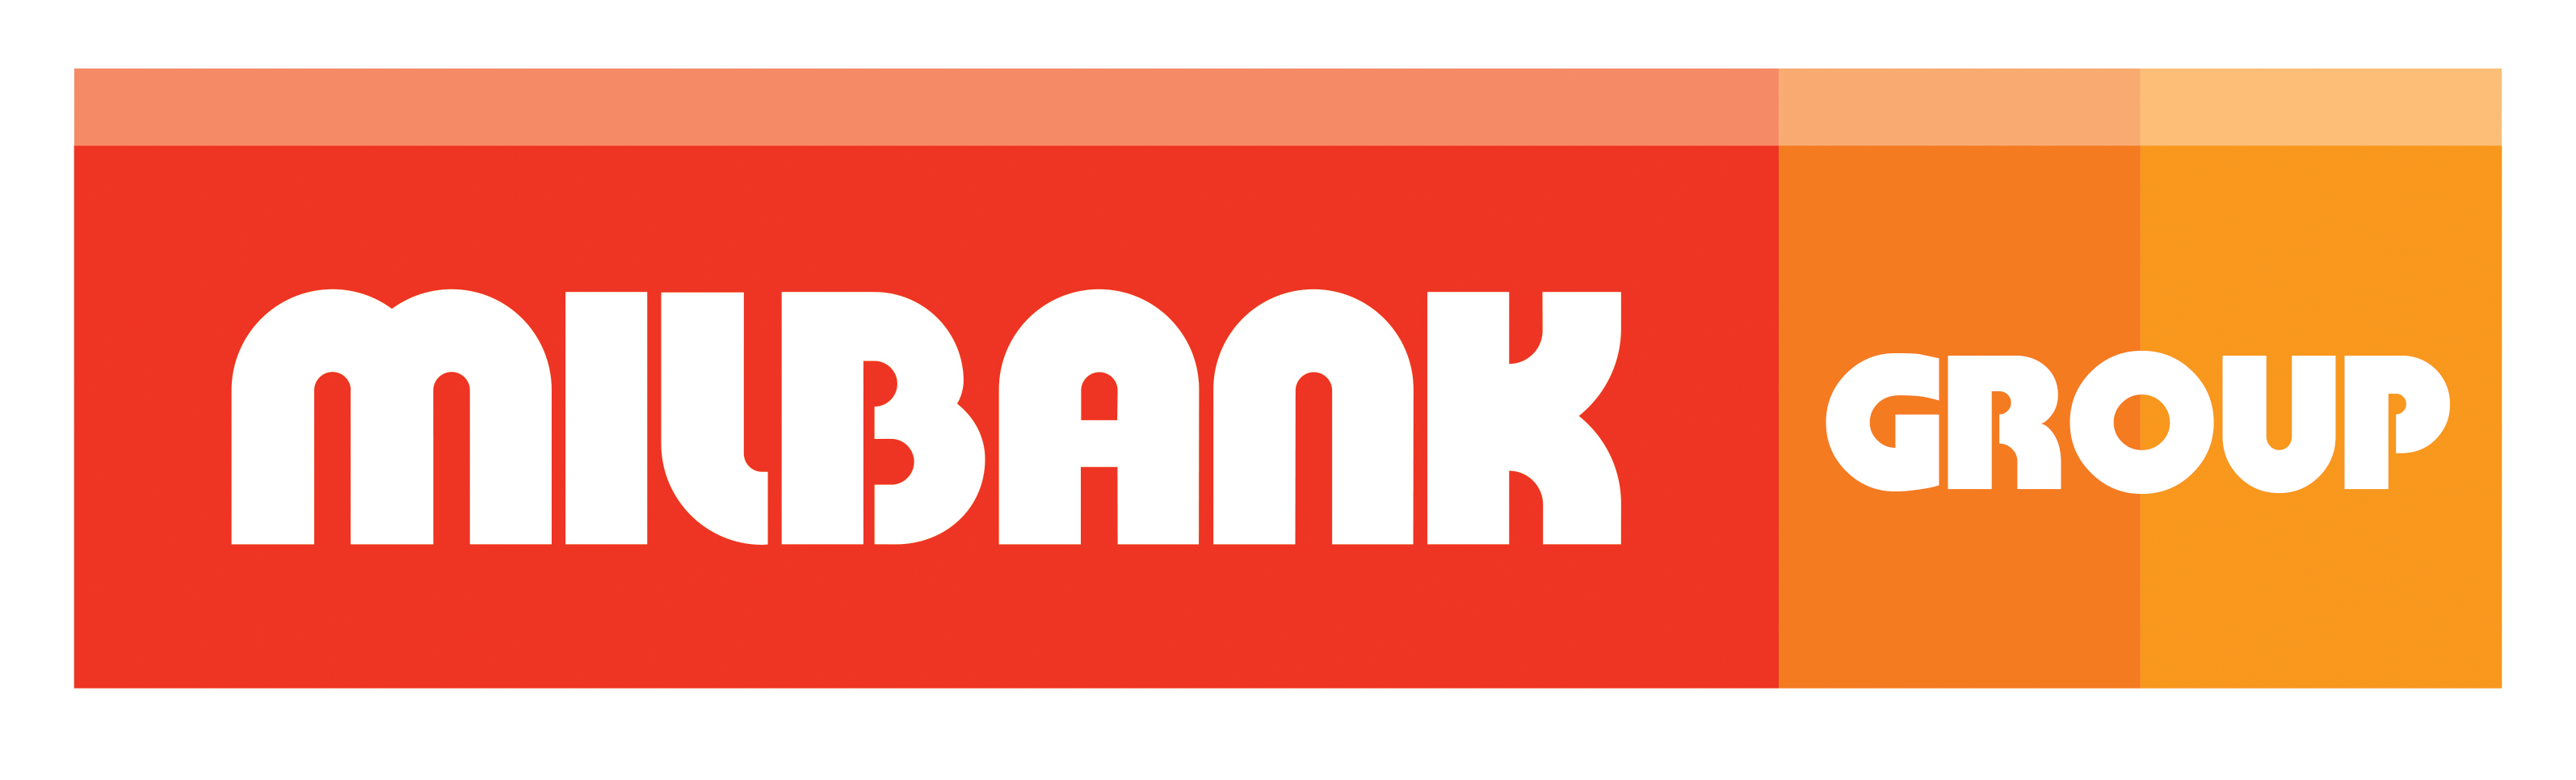 Milbank Group logo